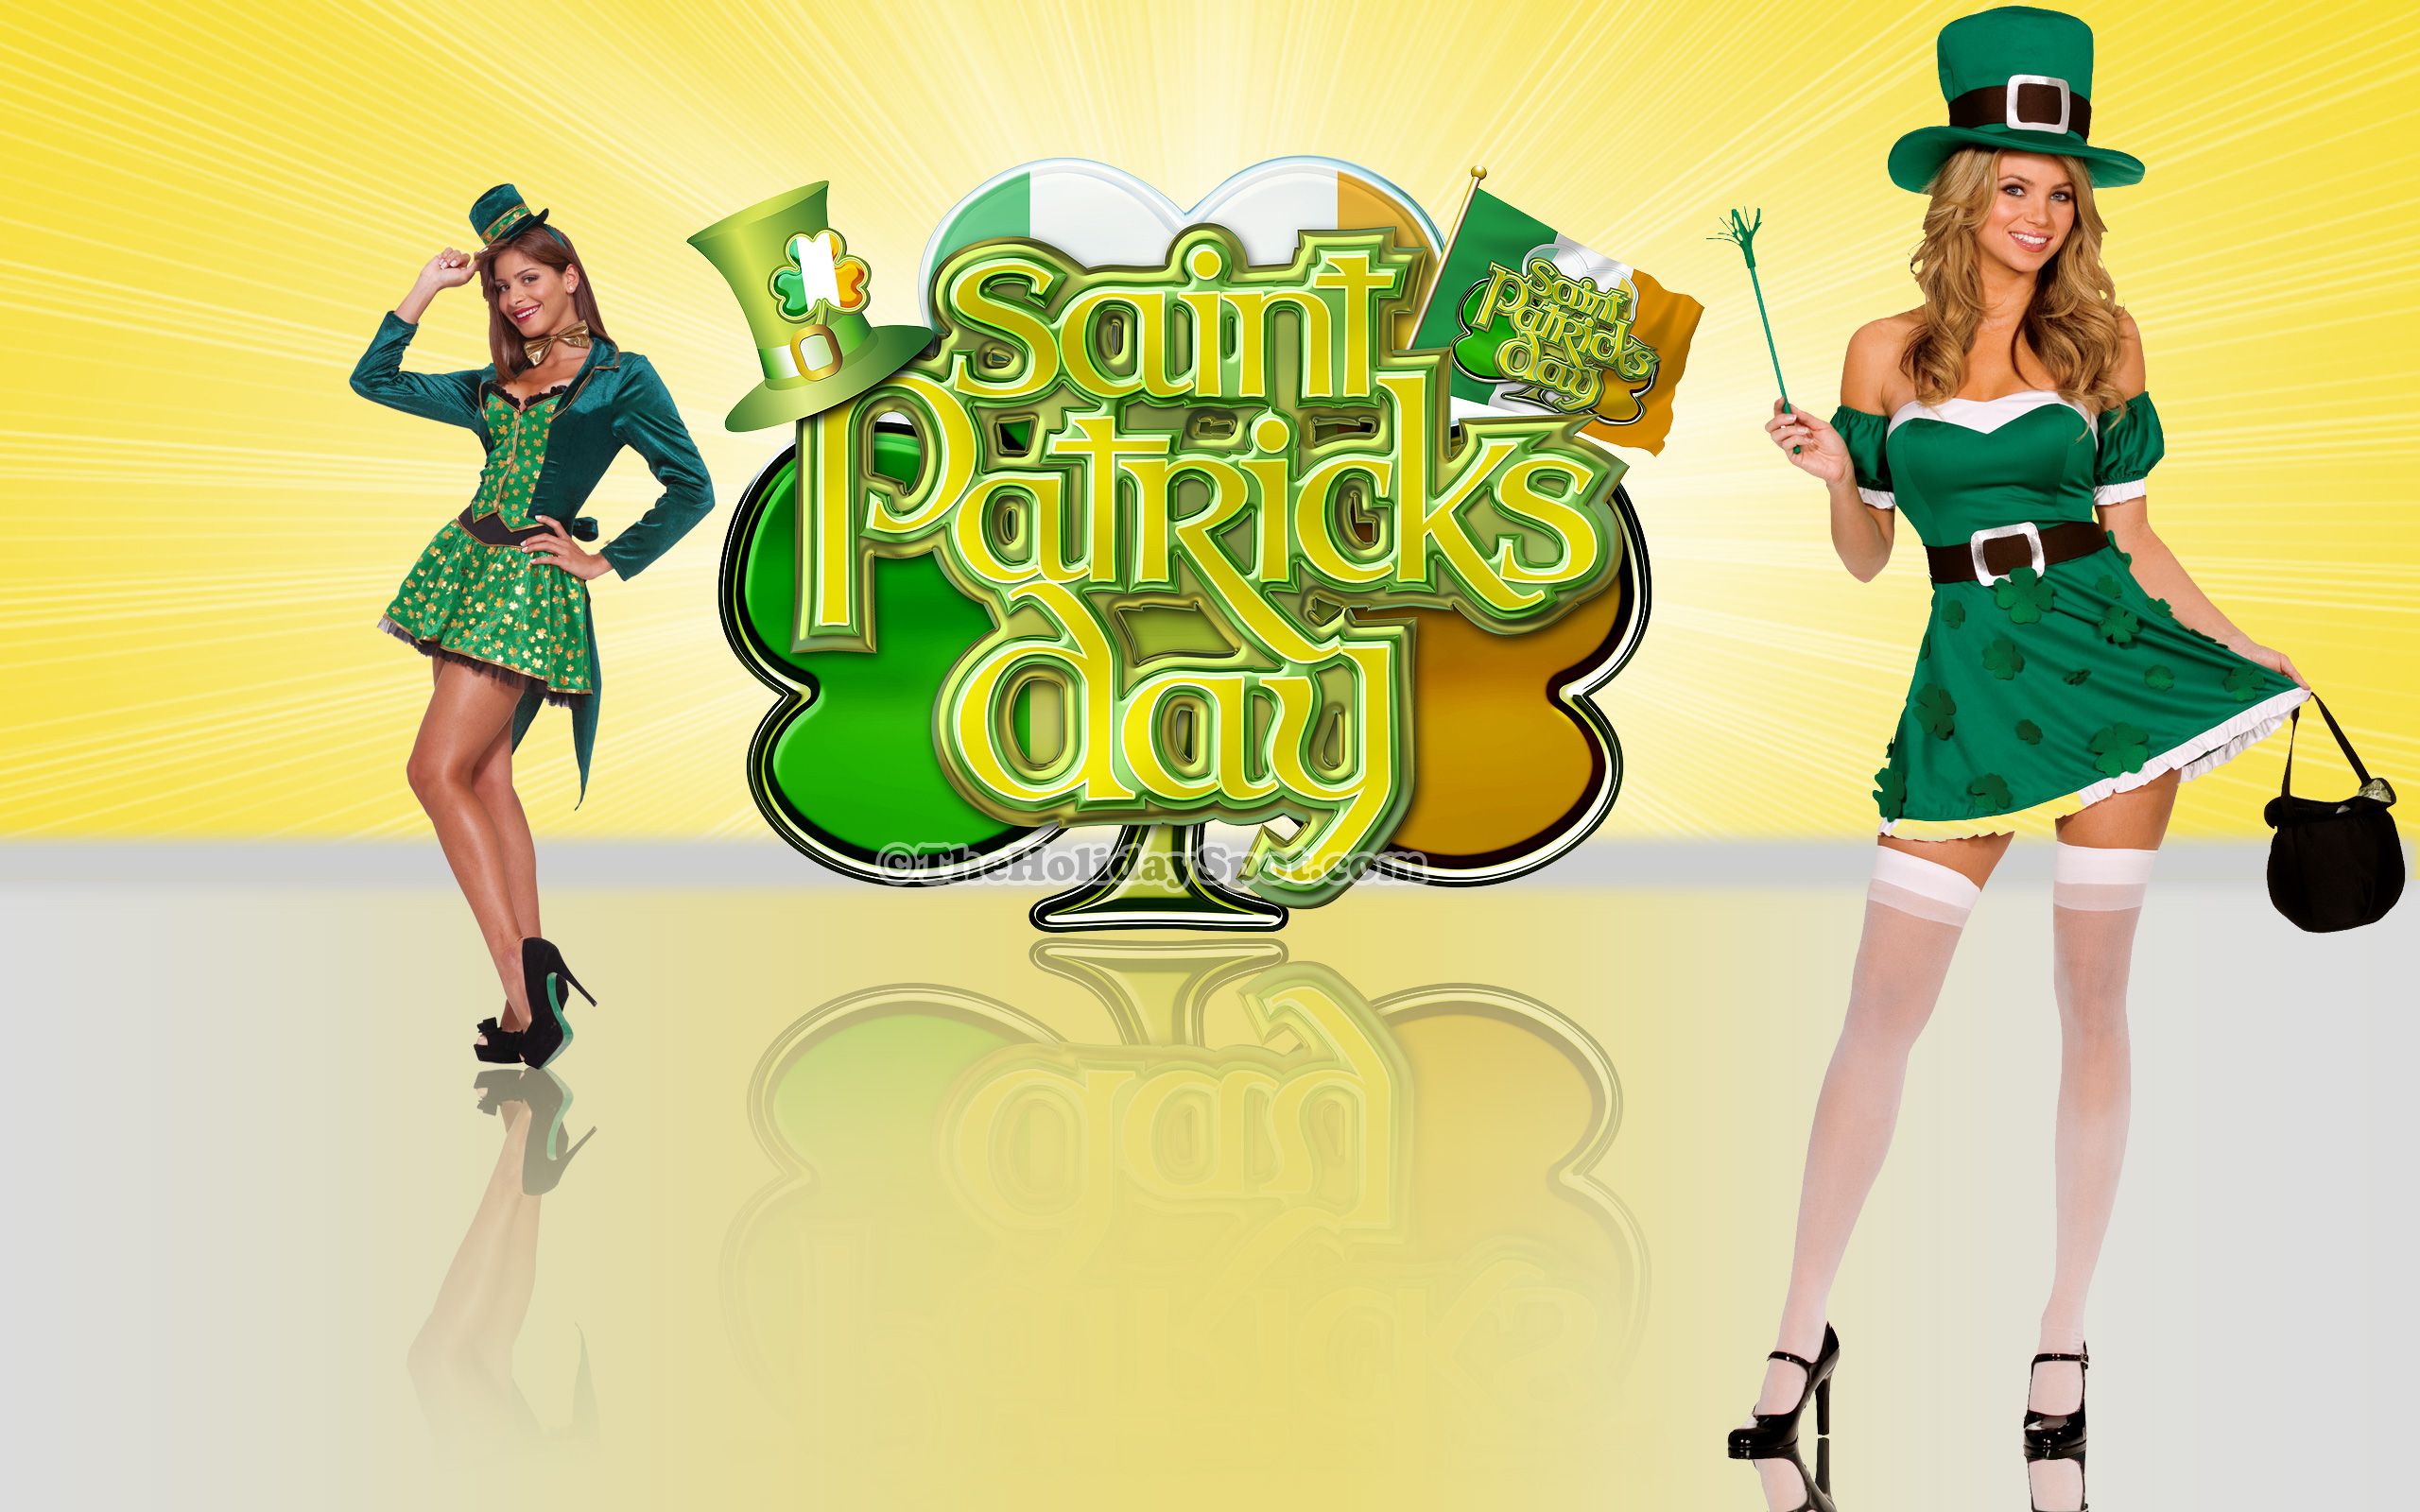 St.Patrick's Day Wallpaper. Free Irish Wallpaper Background. Patrick day Image